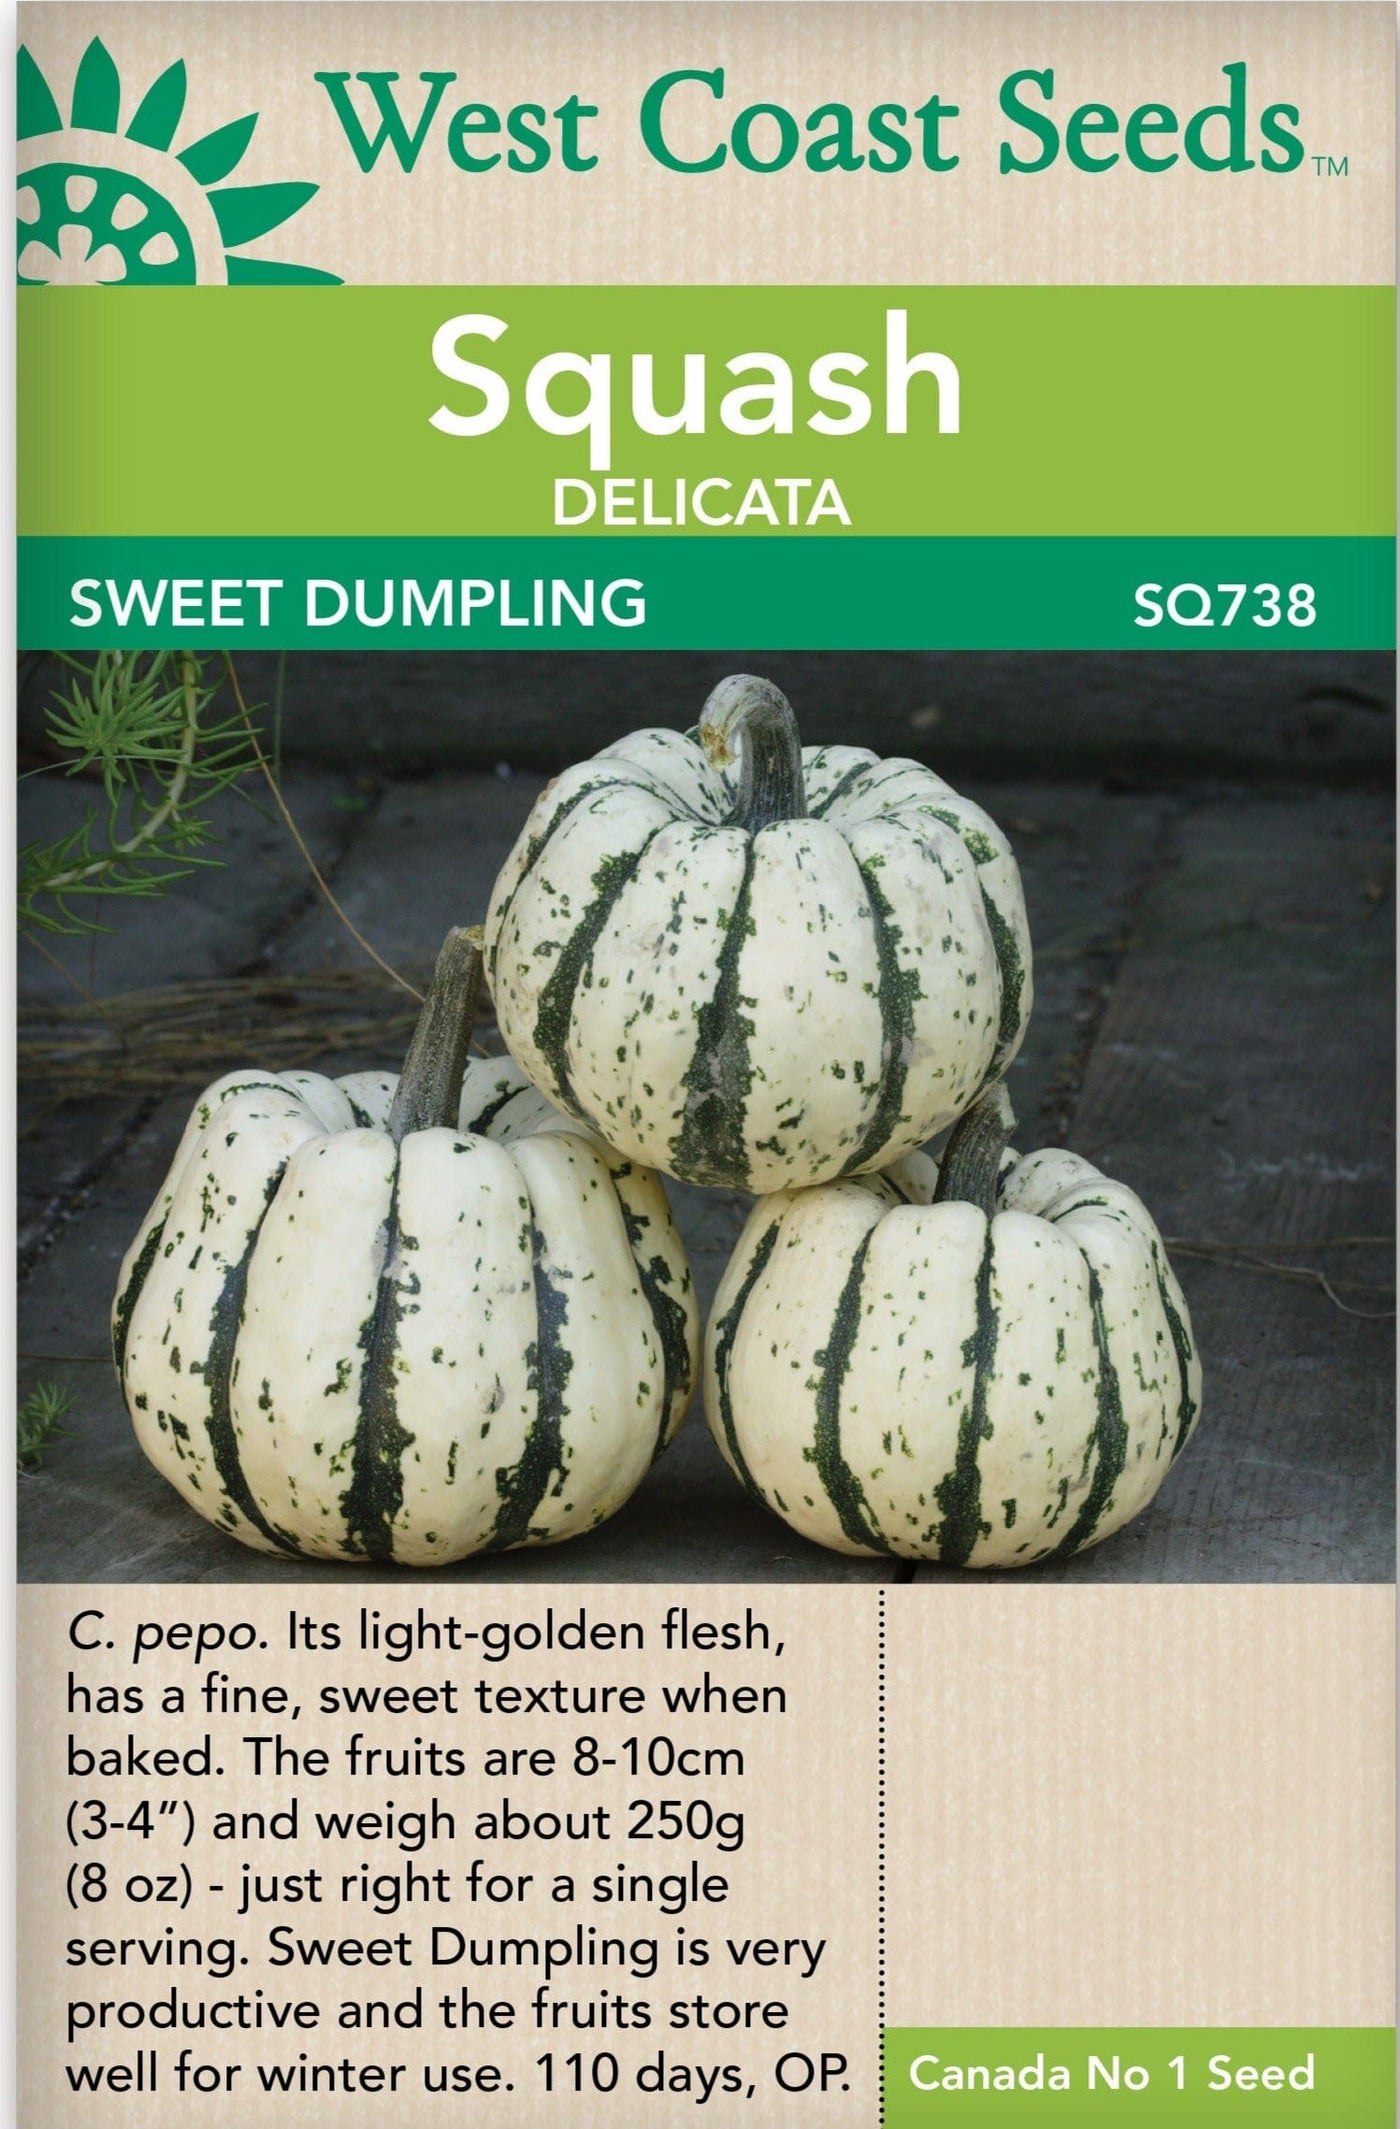 Squash Sweet Dumpling - West Coast Seeds